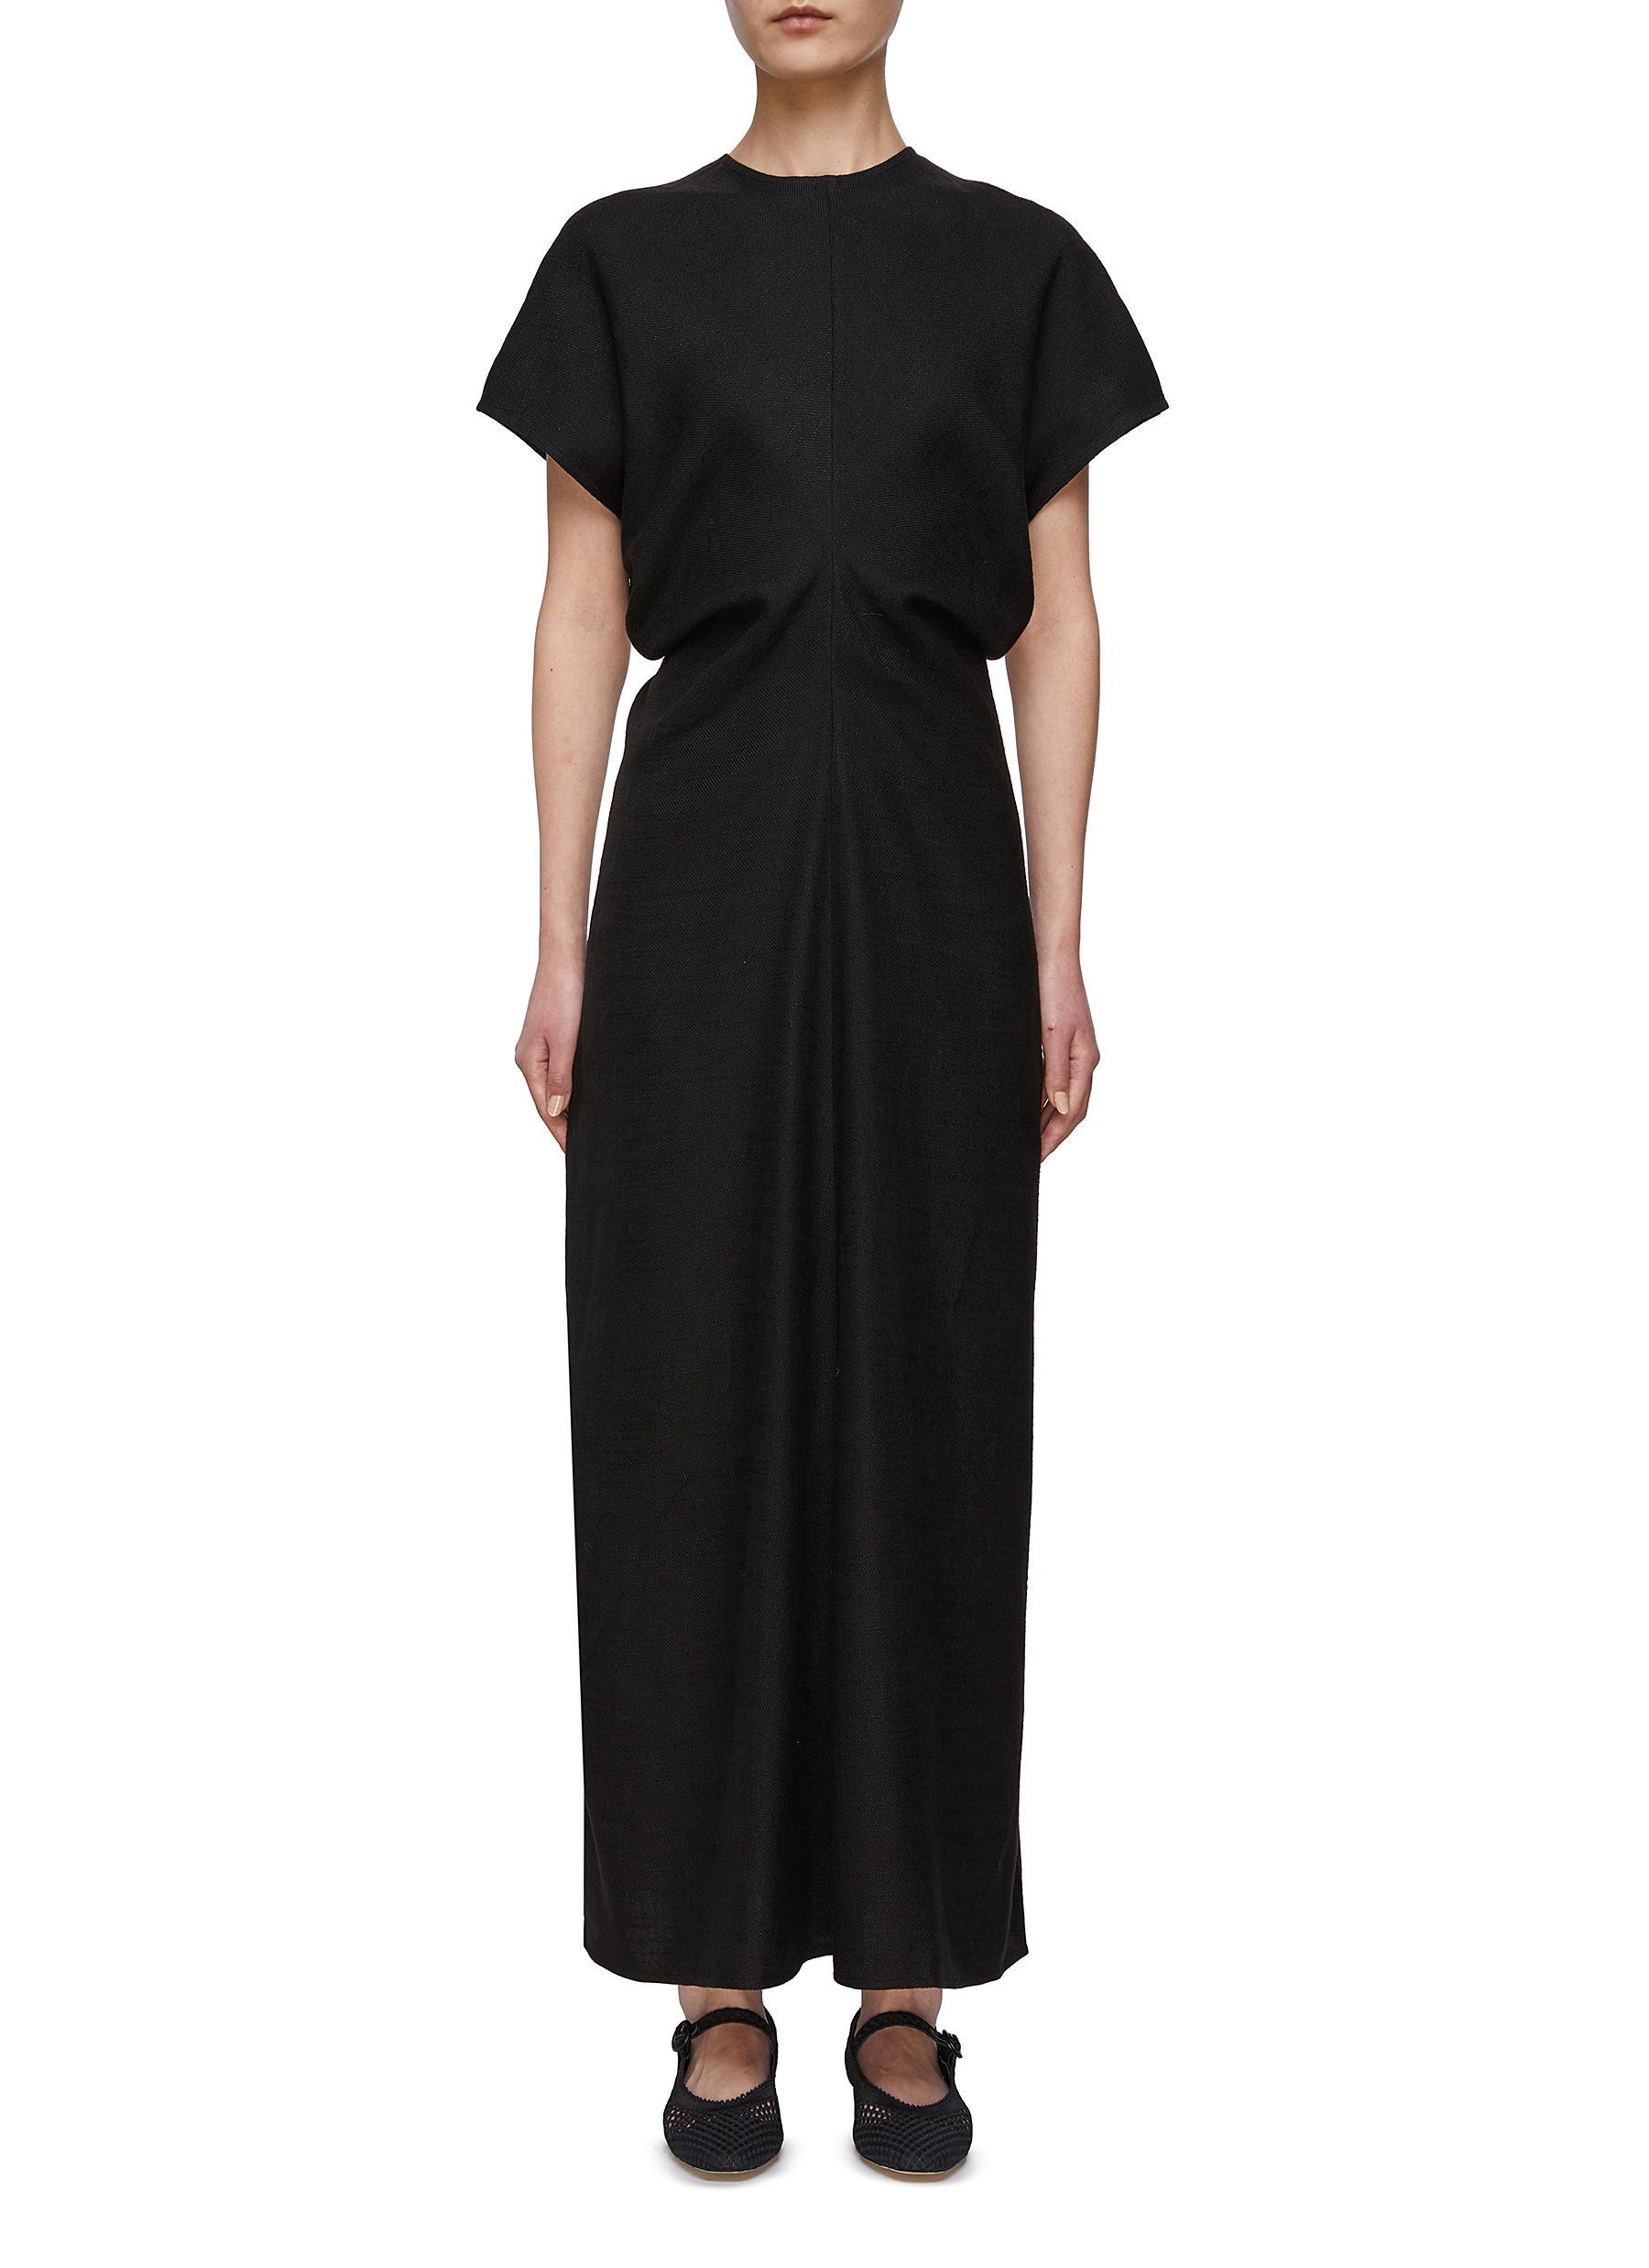 Totême Slouchy Waist Cap Sleeve Maxi Dress in Black | Lyst